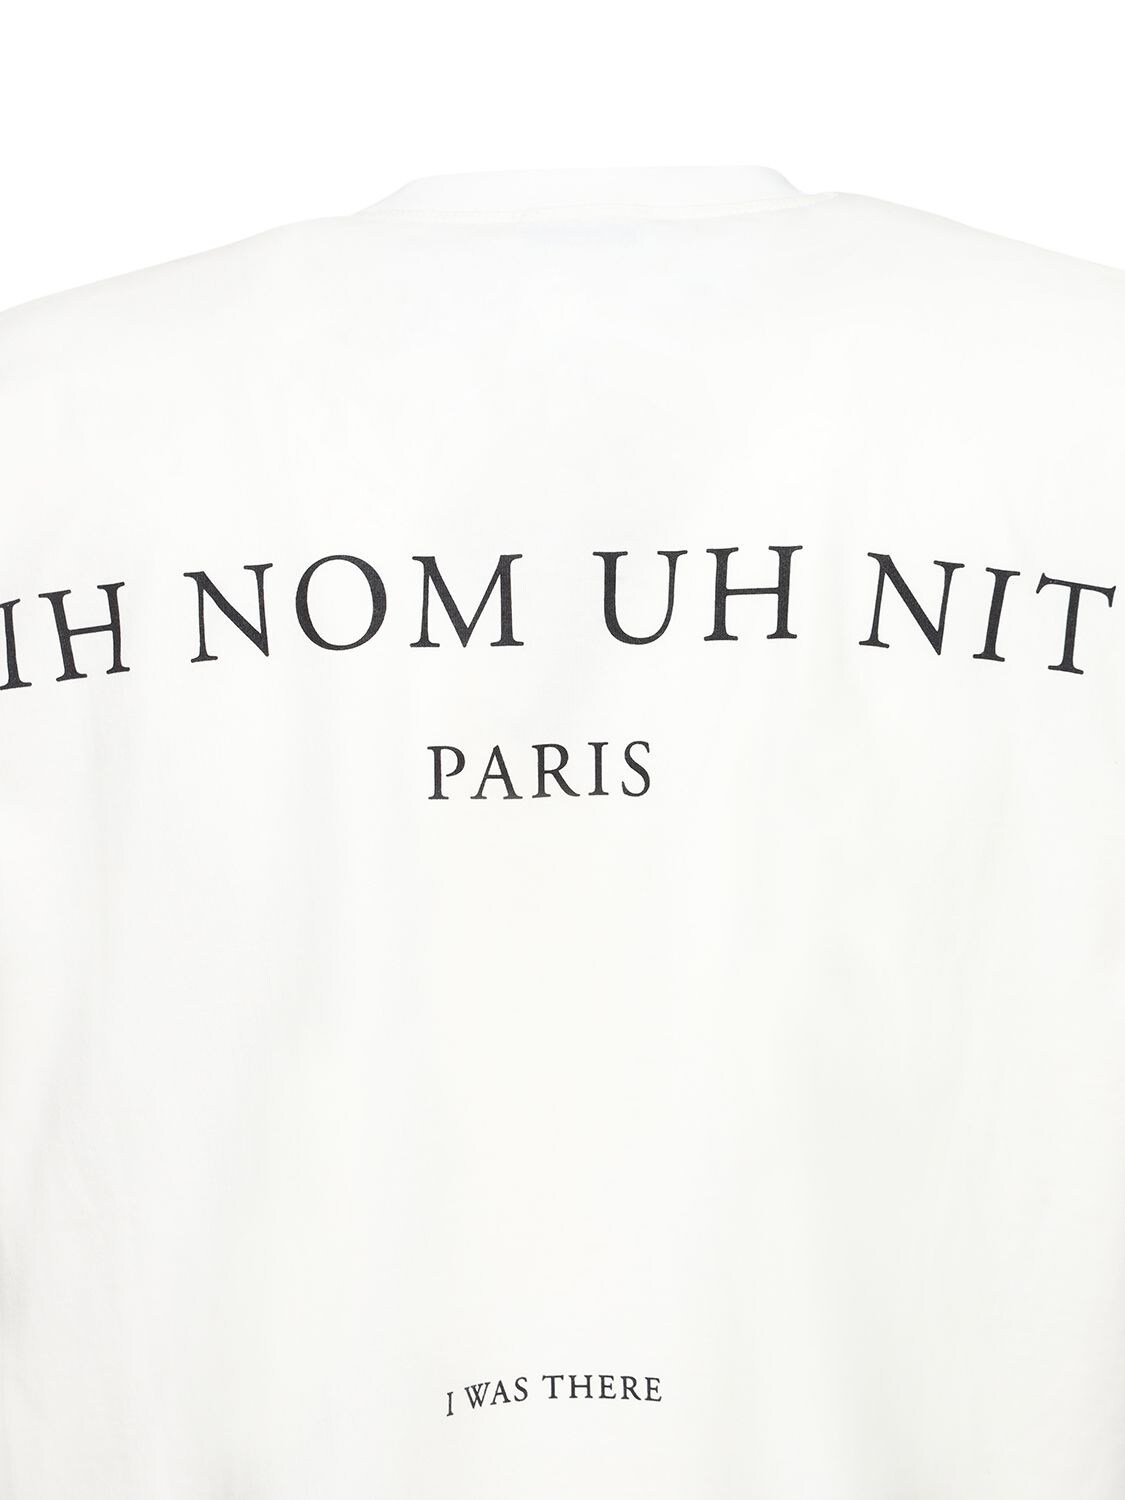 Future Archive jersey T-shirt | Ih Nom Uh Nit 